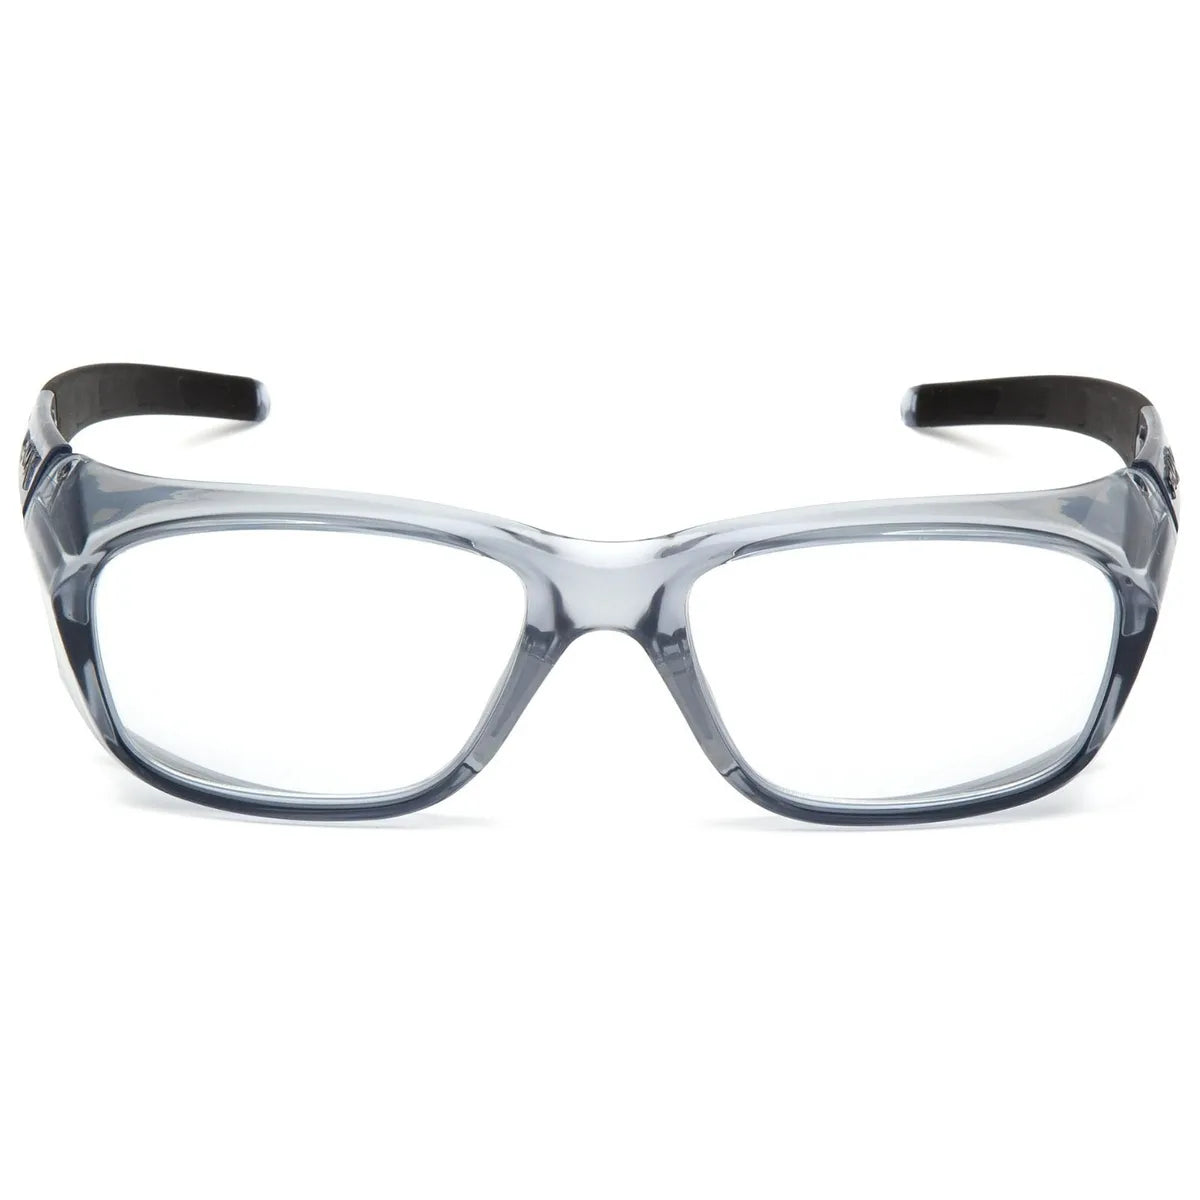 Pyramex Emerge Plus Safety Glasses Gray Frame